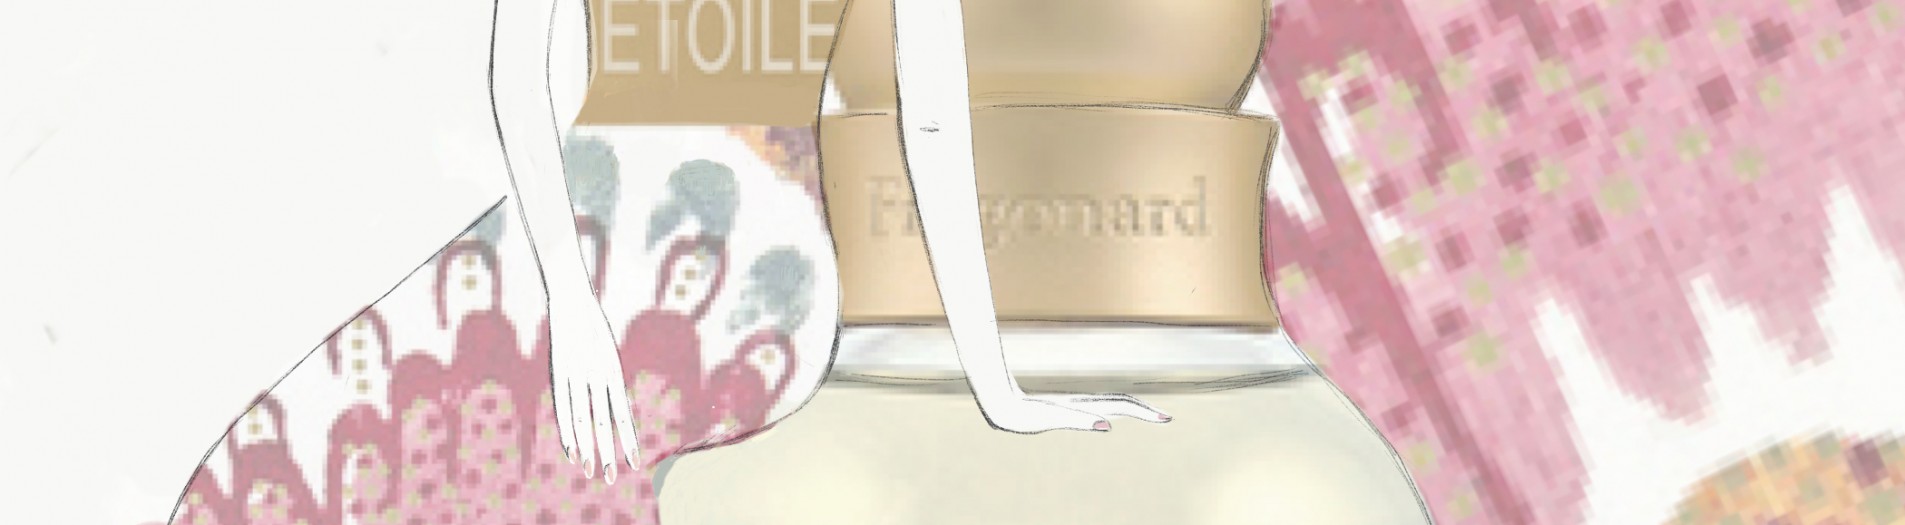 Fragonard Etoile Parfum Illustration